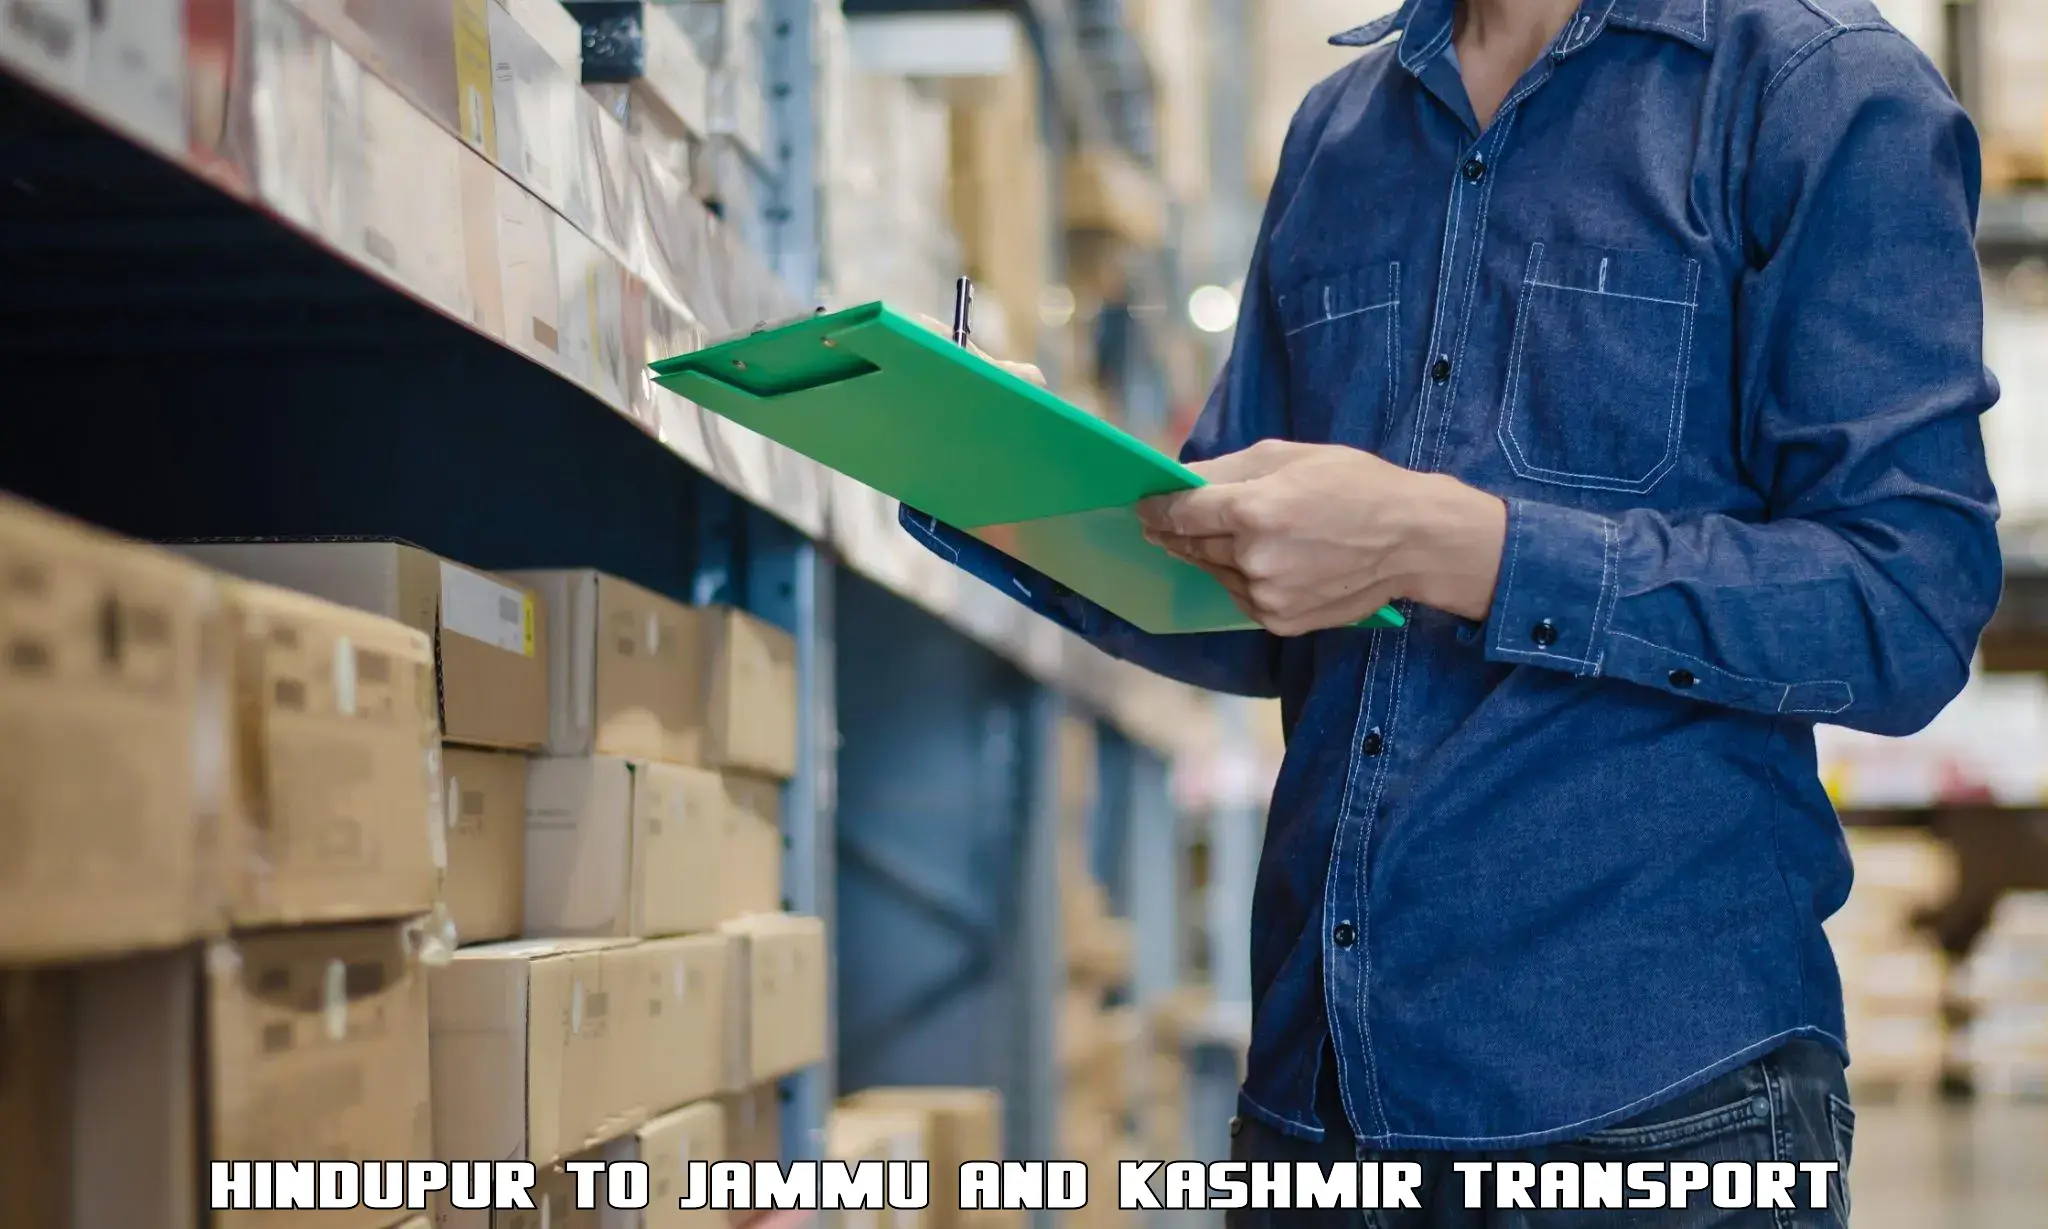 Transport shared services Hindupur to Jammu and Kashmir